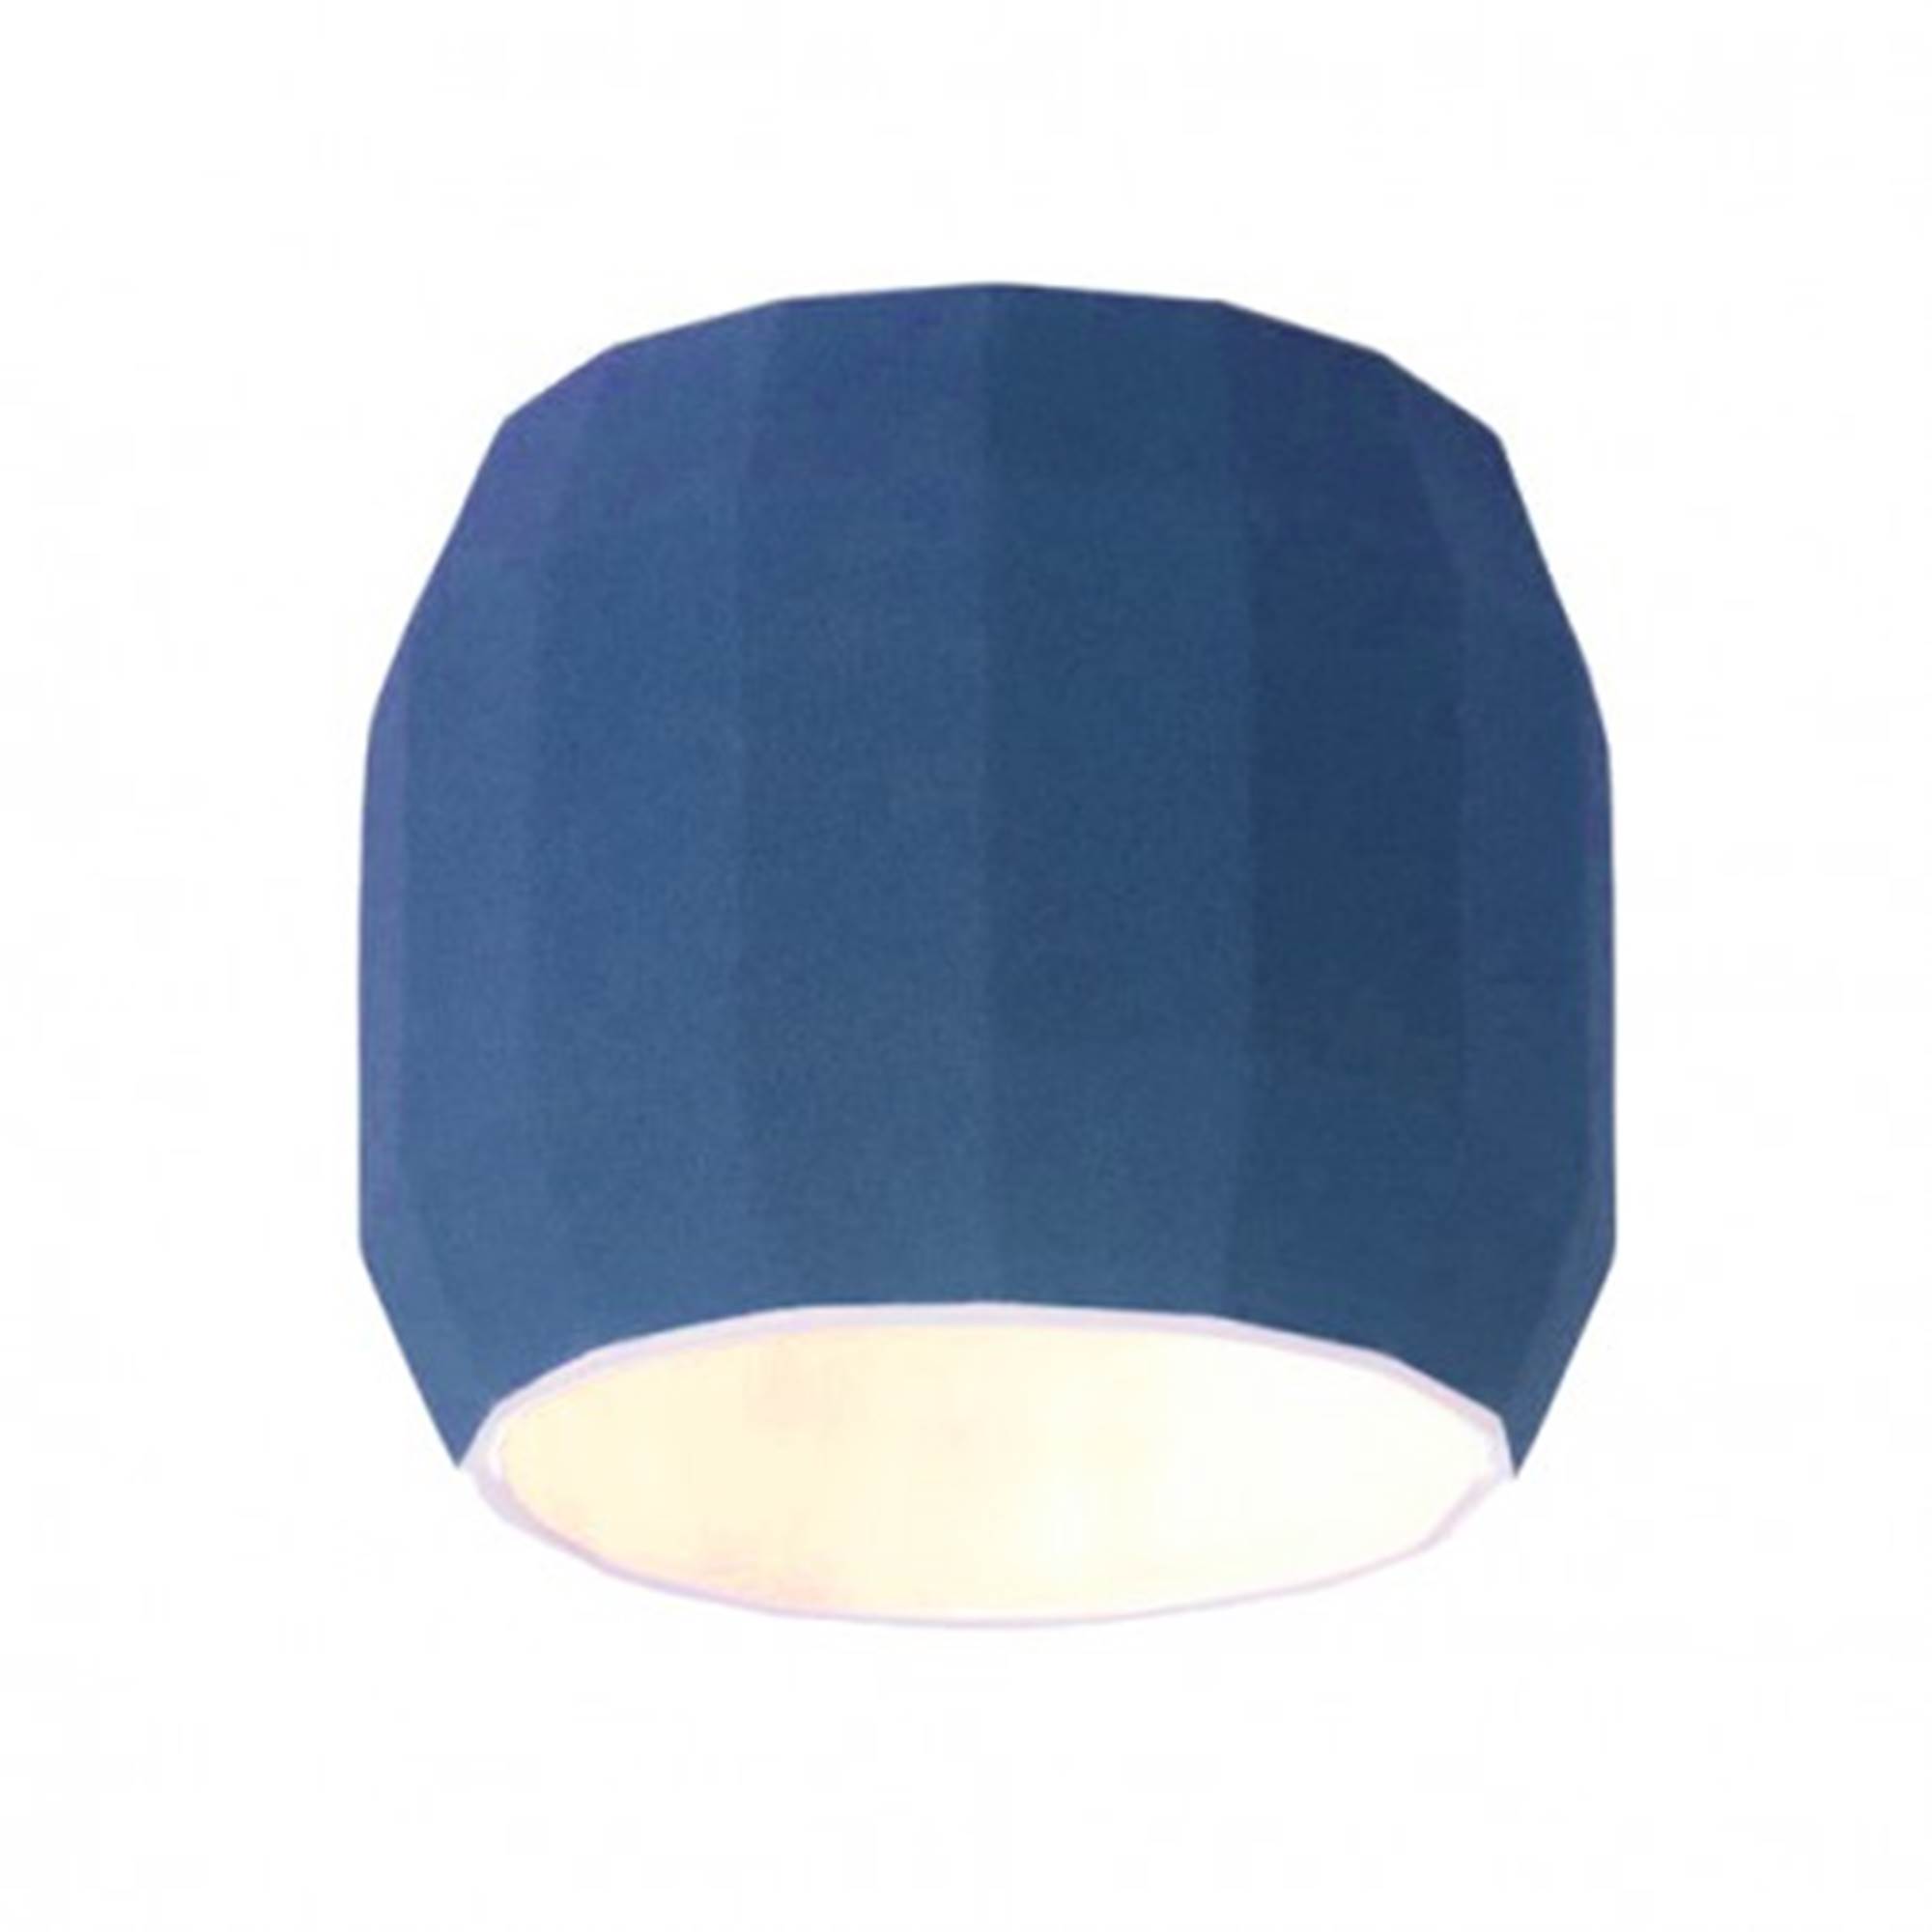 Marset Scotch Club Ceiling Light with Ceramic Diffuser - Blue-White